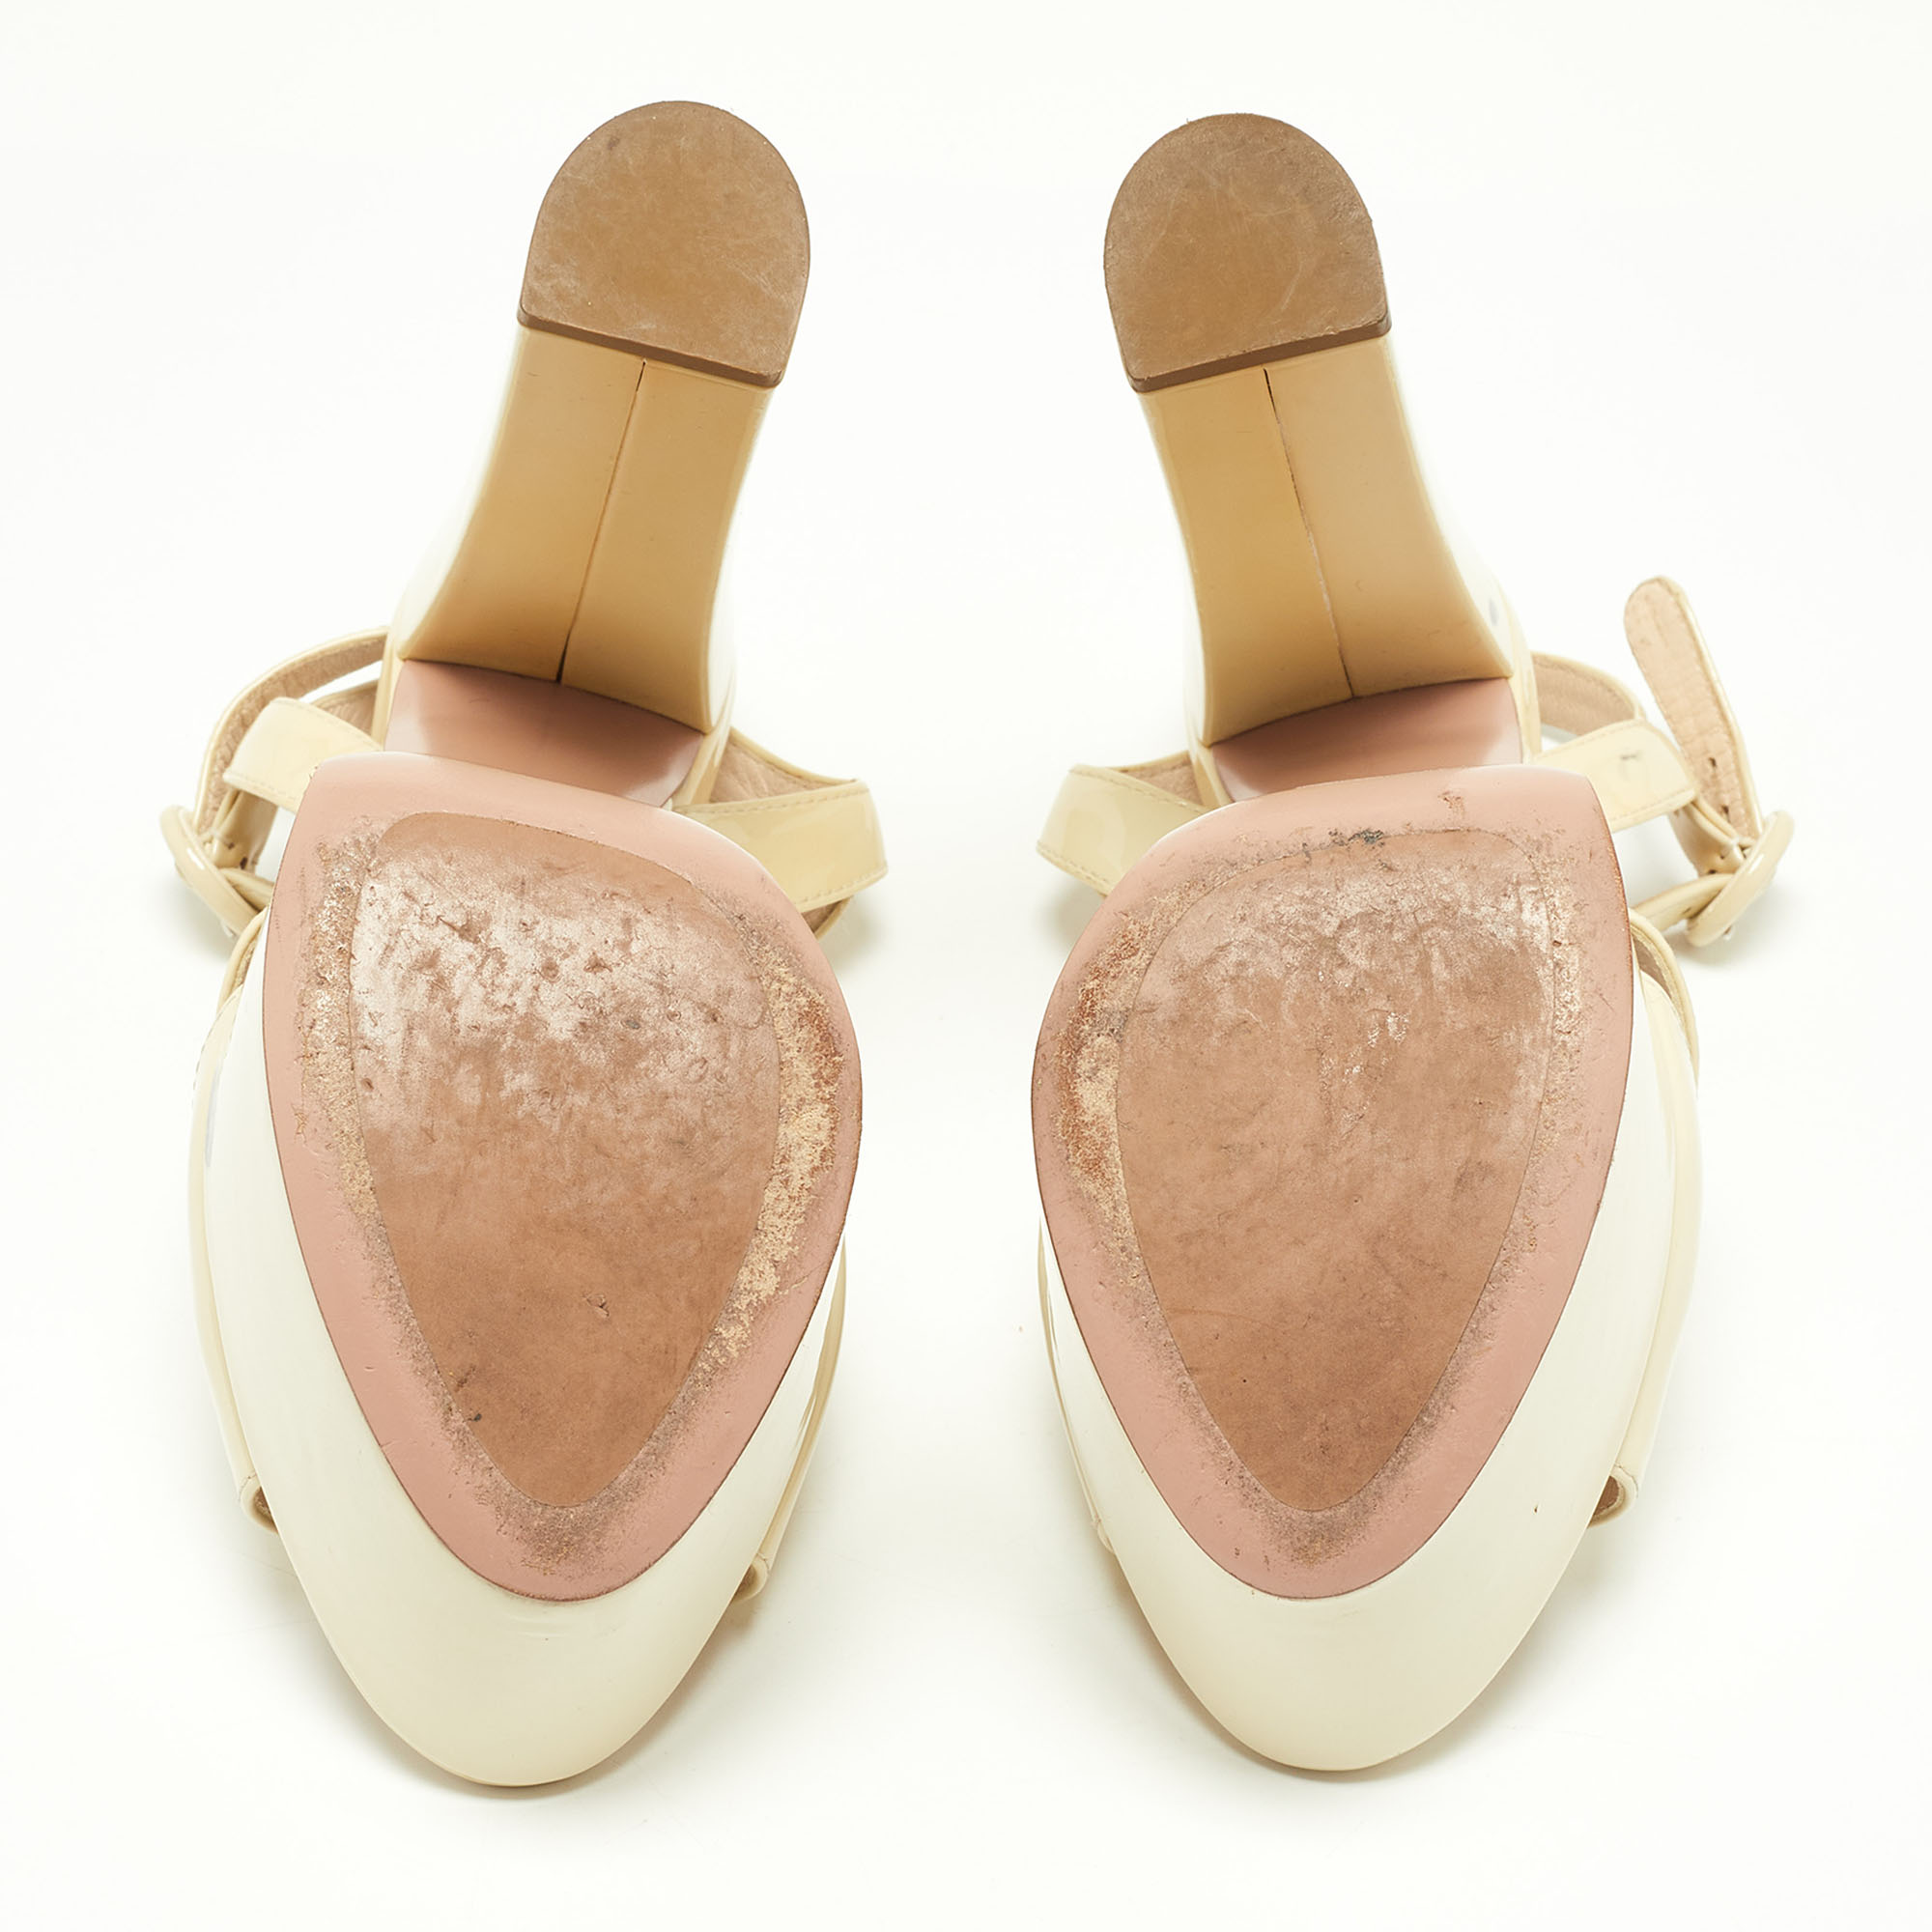 Prada Beige Patent Leather Ankle Strap Block Heel Platform Sandals Size 36.5